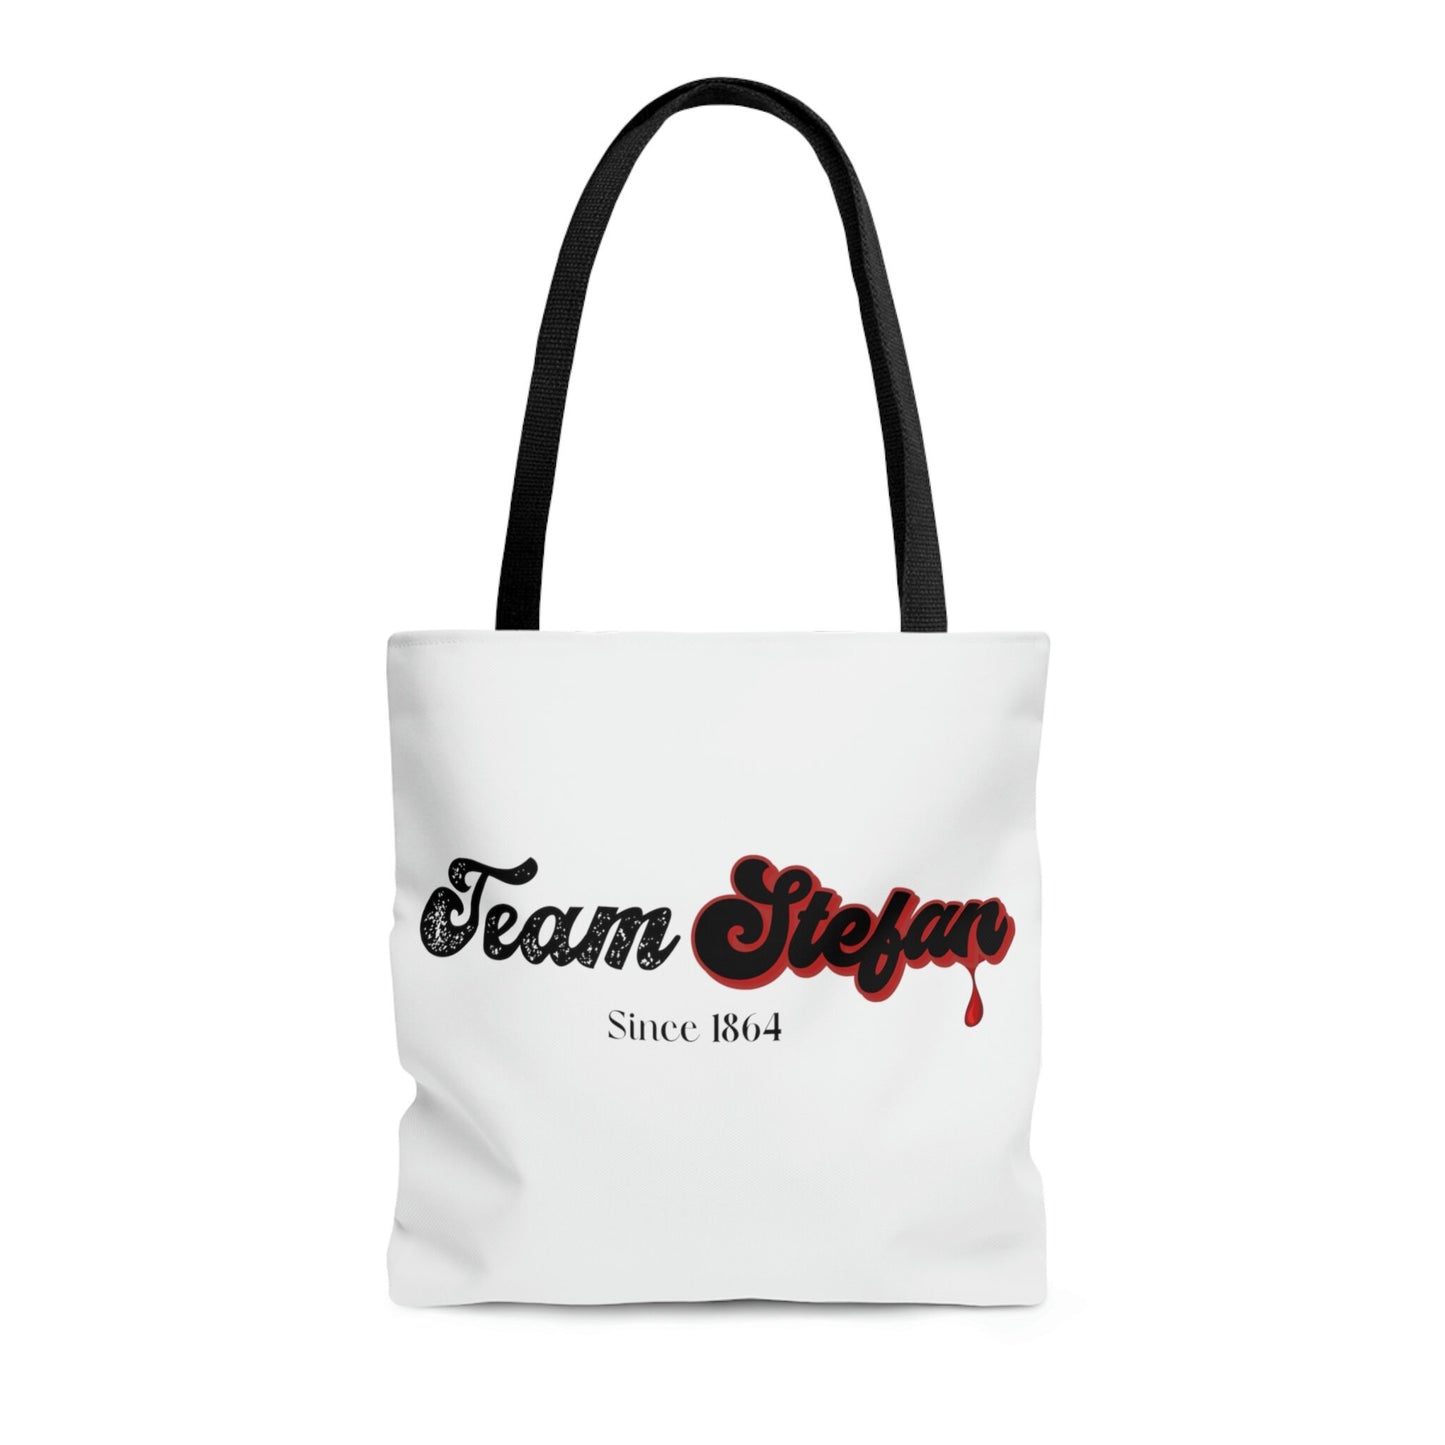 Team Stefan Tote Bag, Stefan Salvatore tote bag, Tvd tote bag, Tvd merch, Tvd shopping bag,  Salvatore brothers, Tvd fan gift